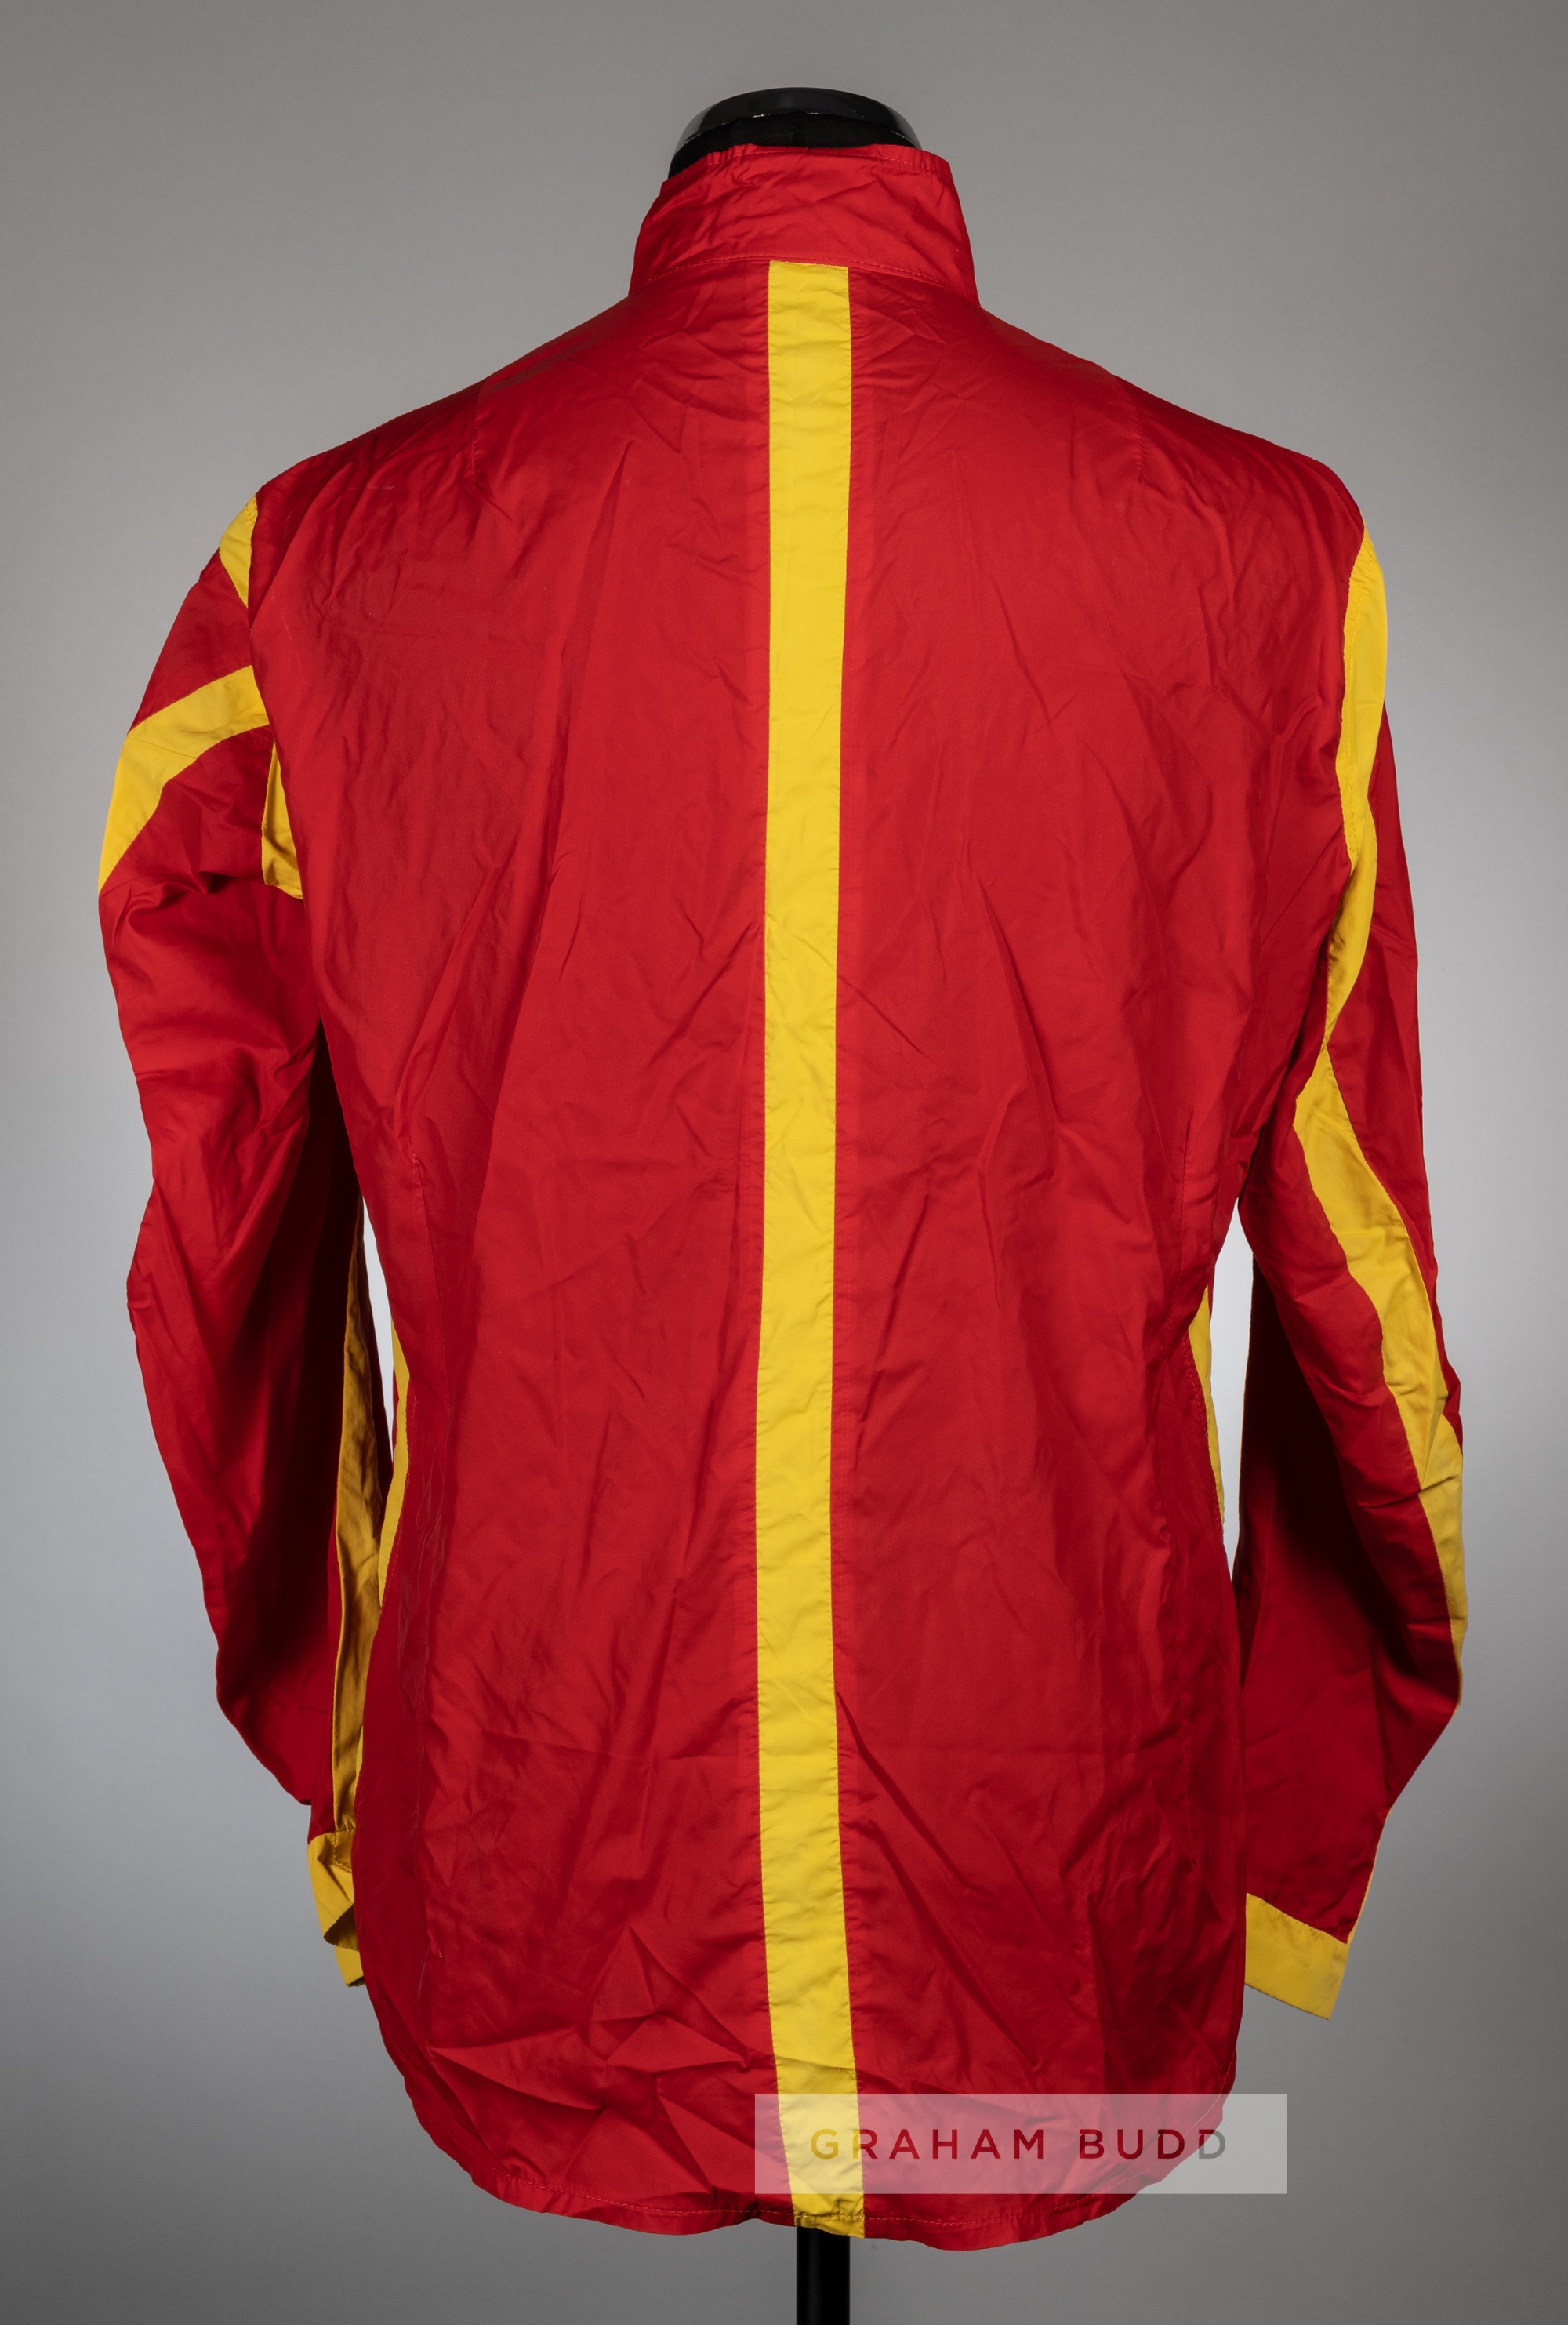 Richard Johnson winning jockey silks, red with yellow seamed jacket bearing ALLERTON & CO makers - Image 2 of 2